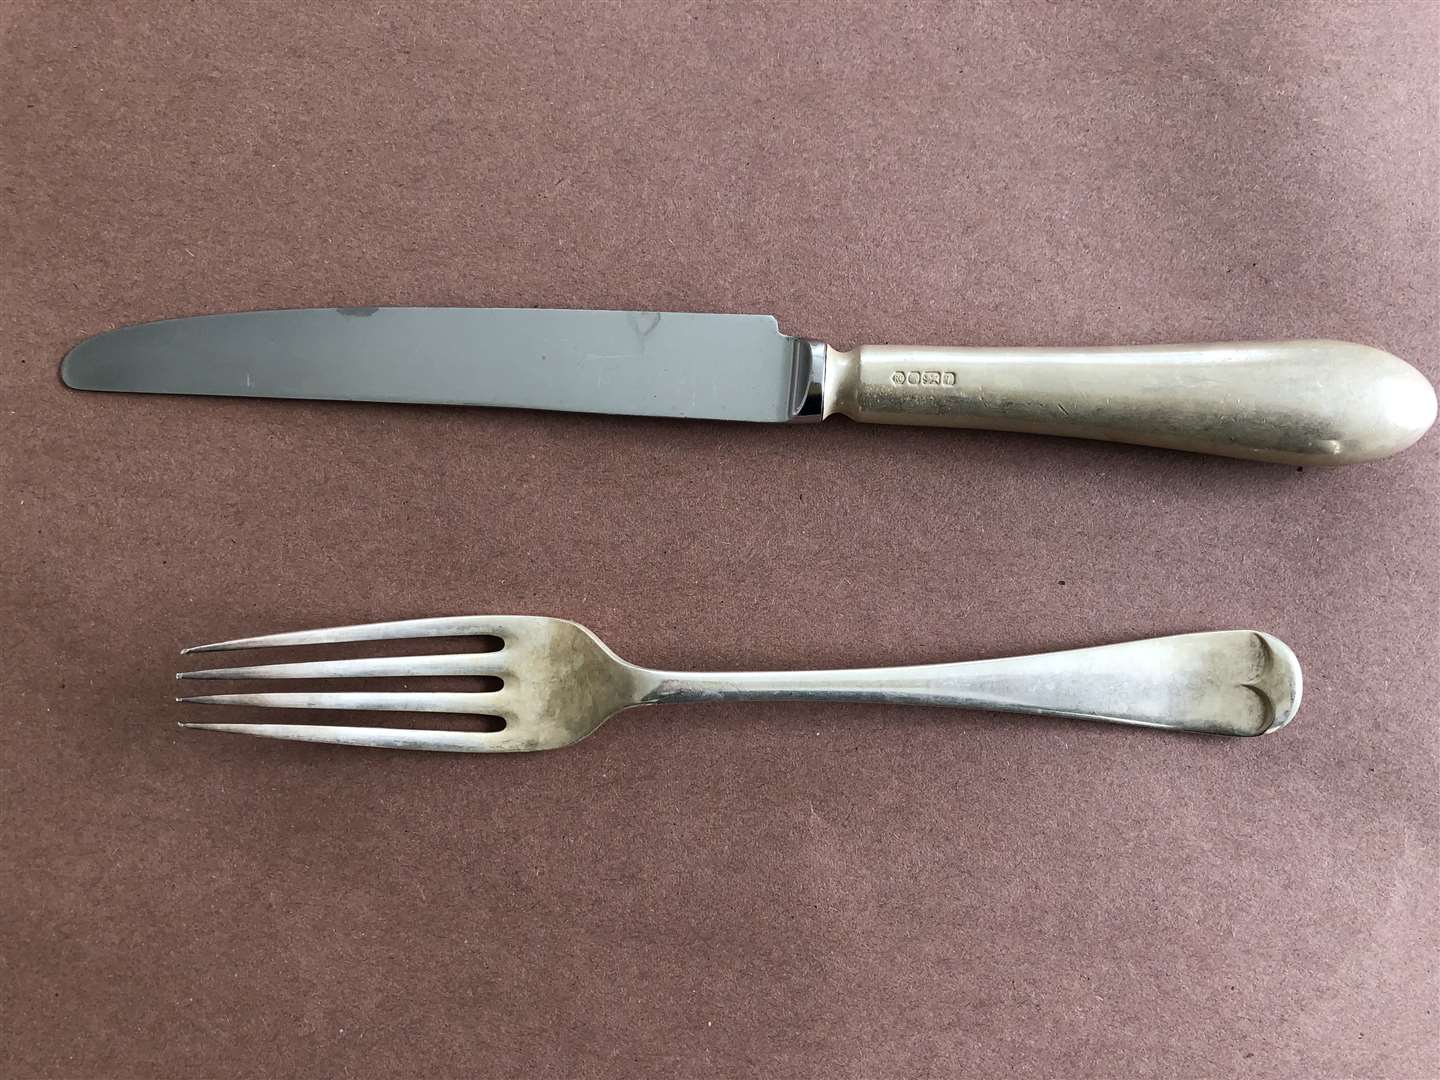 Image of cutlery taken in the break-in. Picture: Kent Police